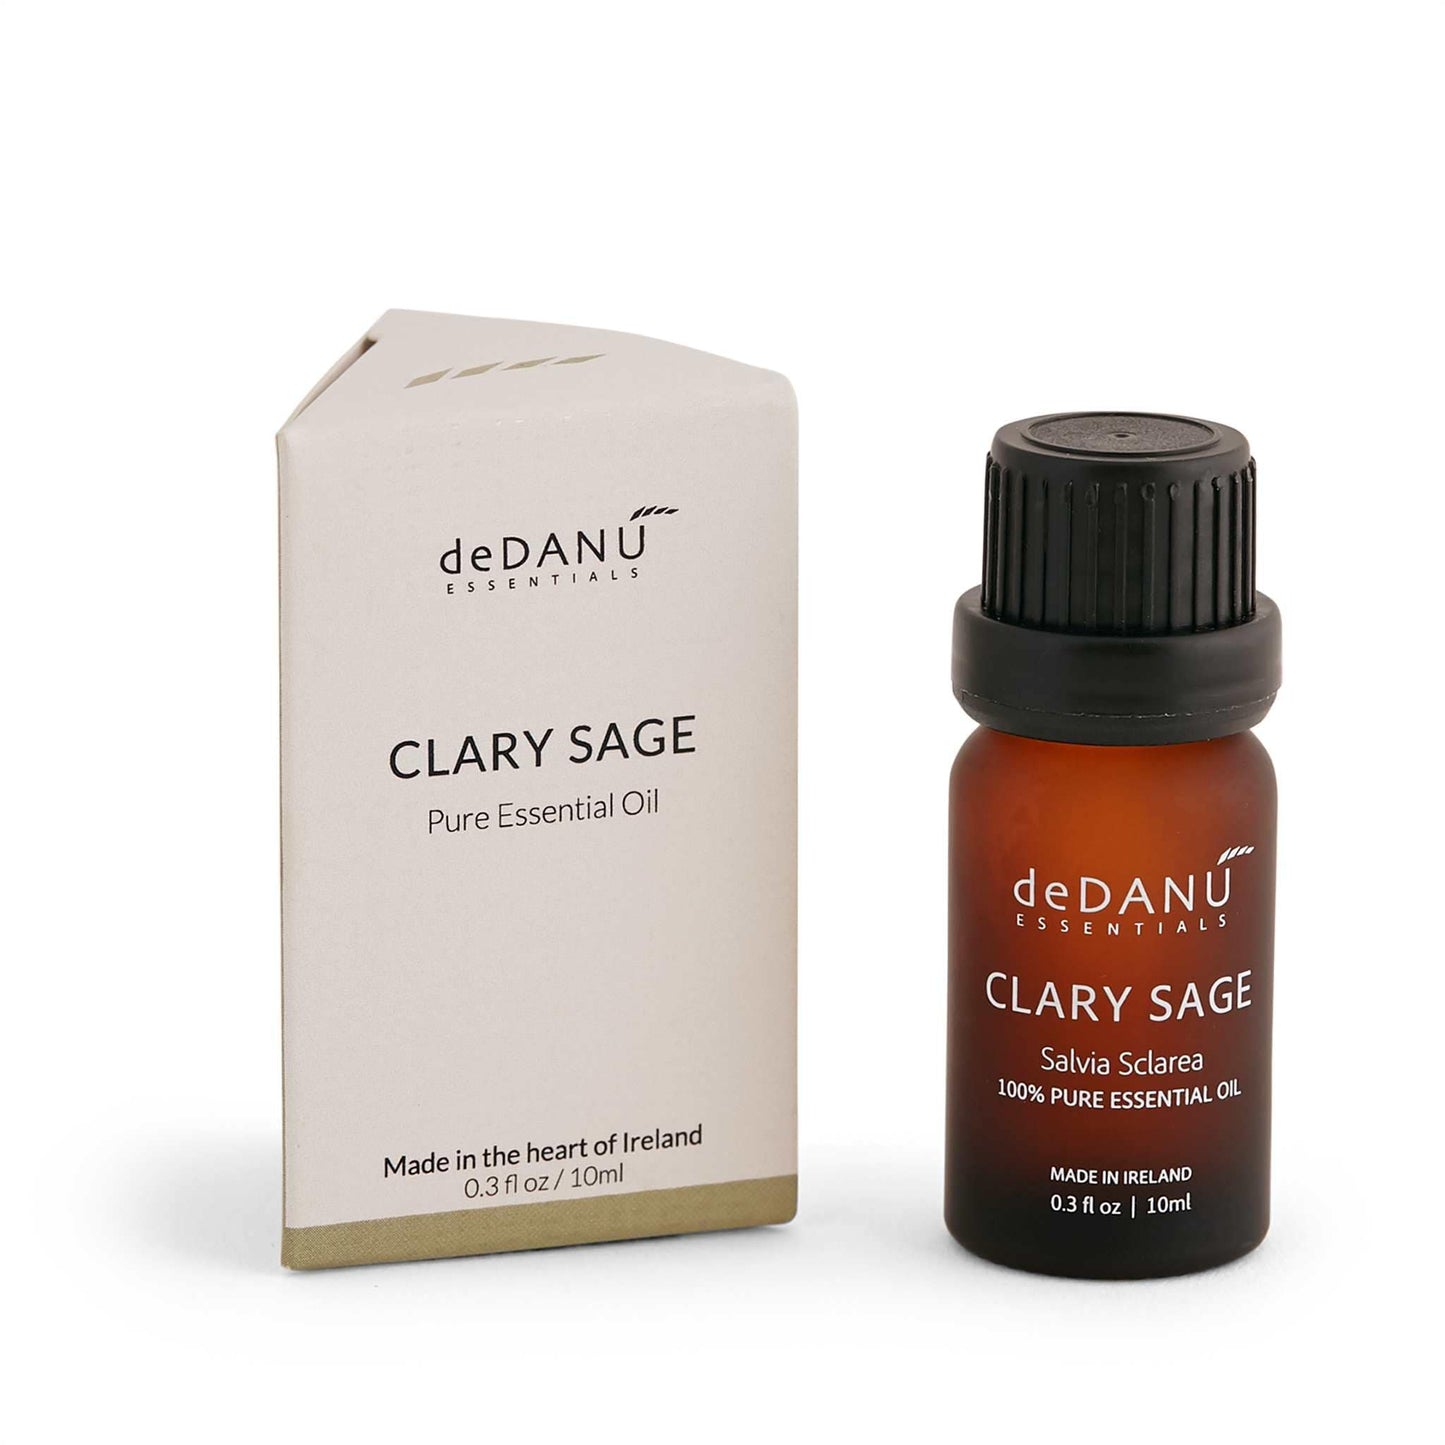 deDANU Essential Oil Clary Sage Pure Essential Oil 10ml – deDANÚ